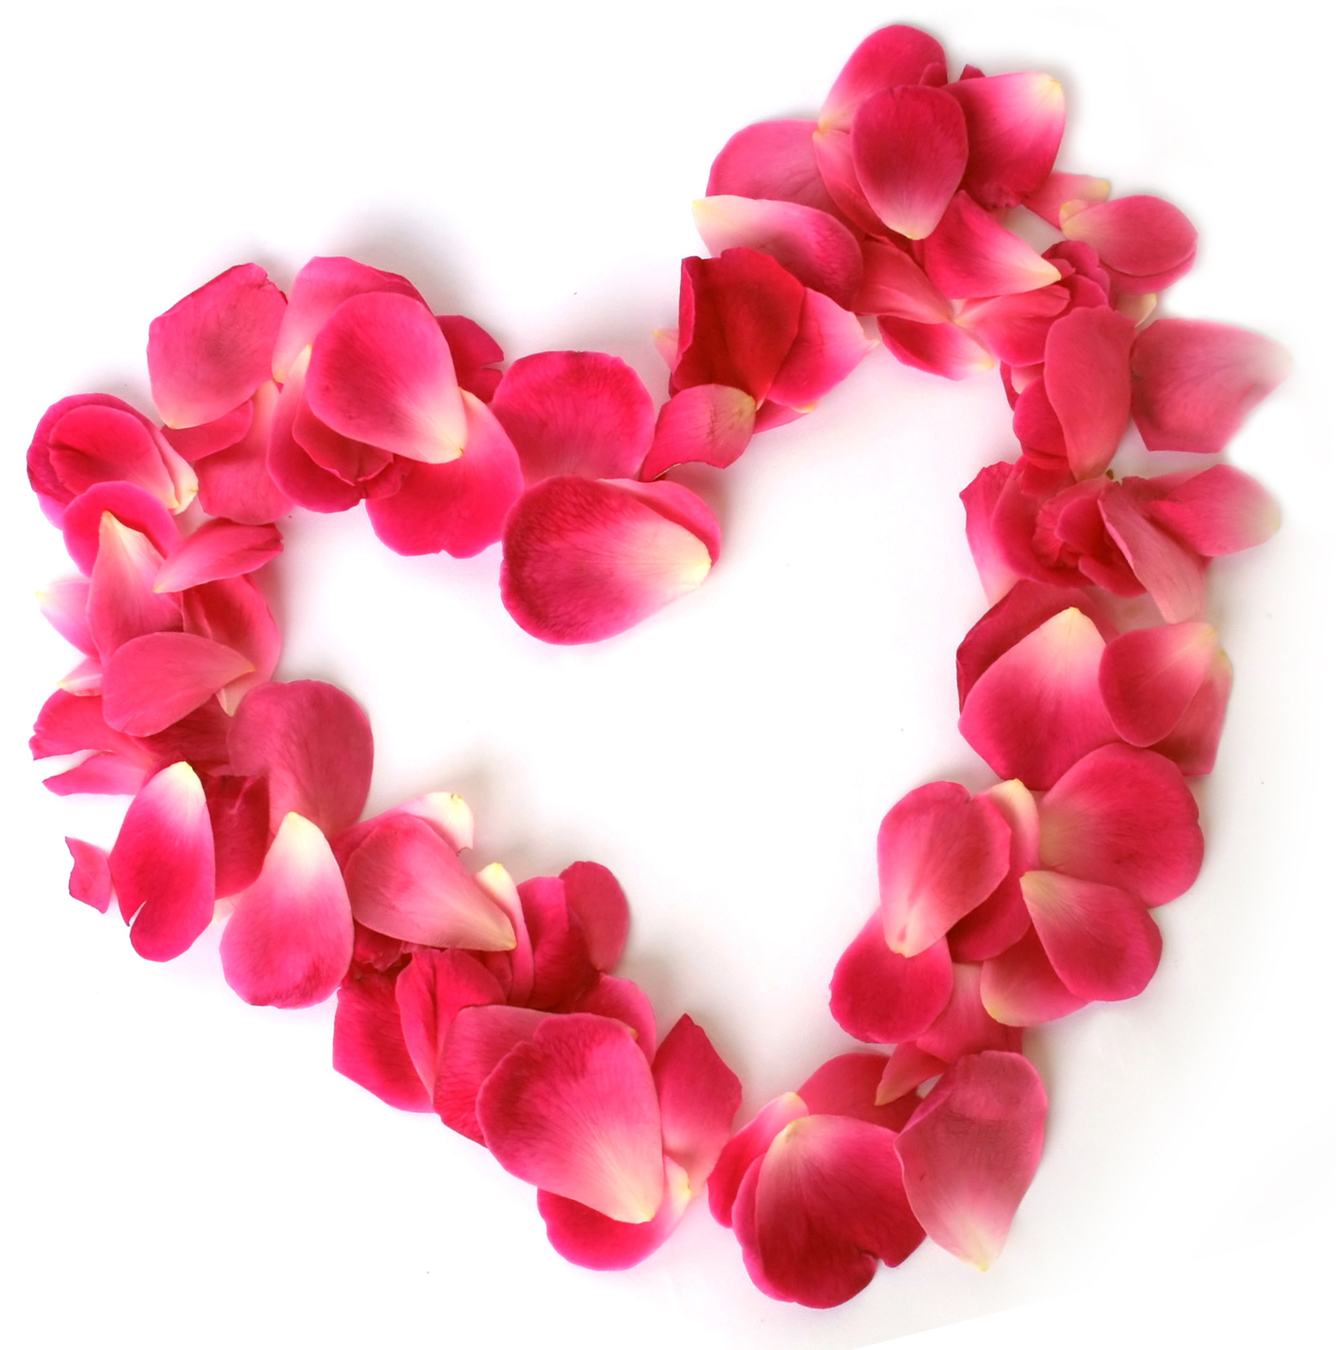 Pink Heart Flowers Love Heart With Flowers 1336x1350 Wallpaper Teahub Io